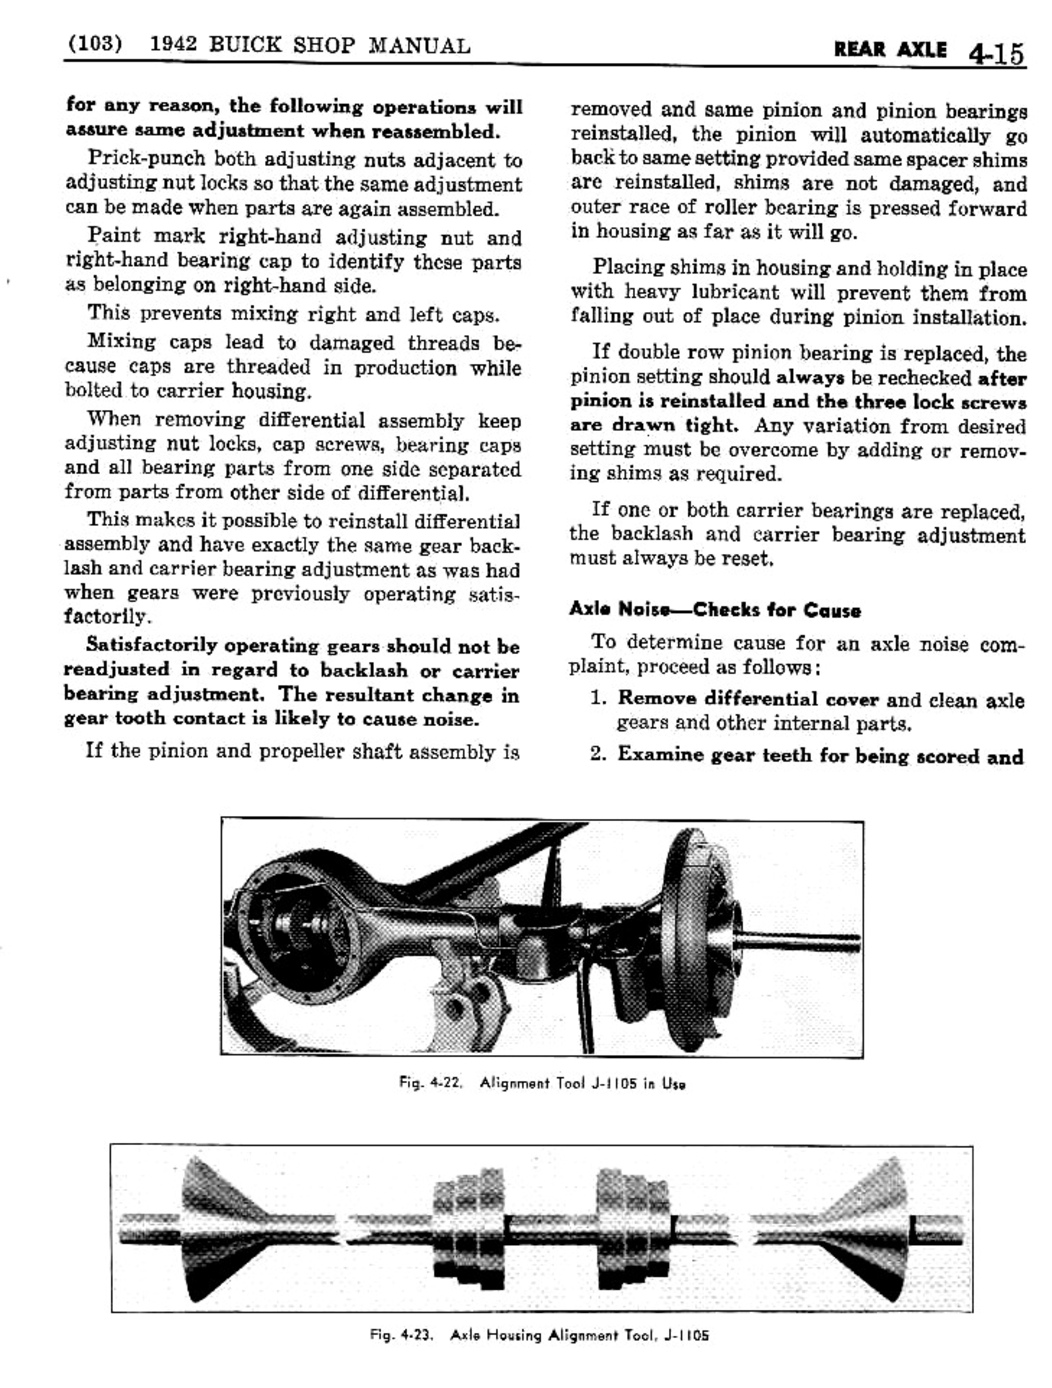 n_05 1942 Buick Shop Manual - Rear Axle-015-015.jpg